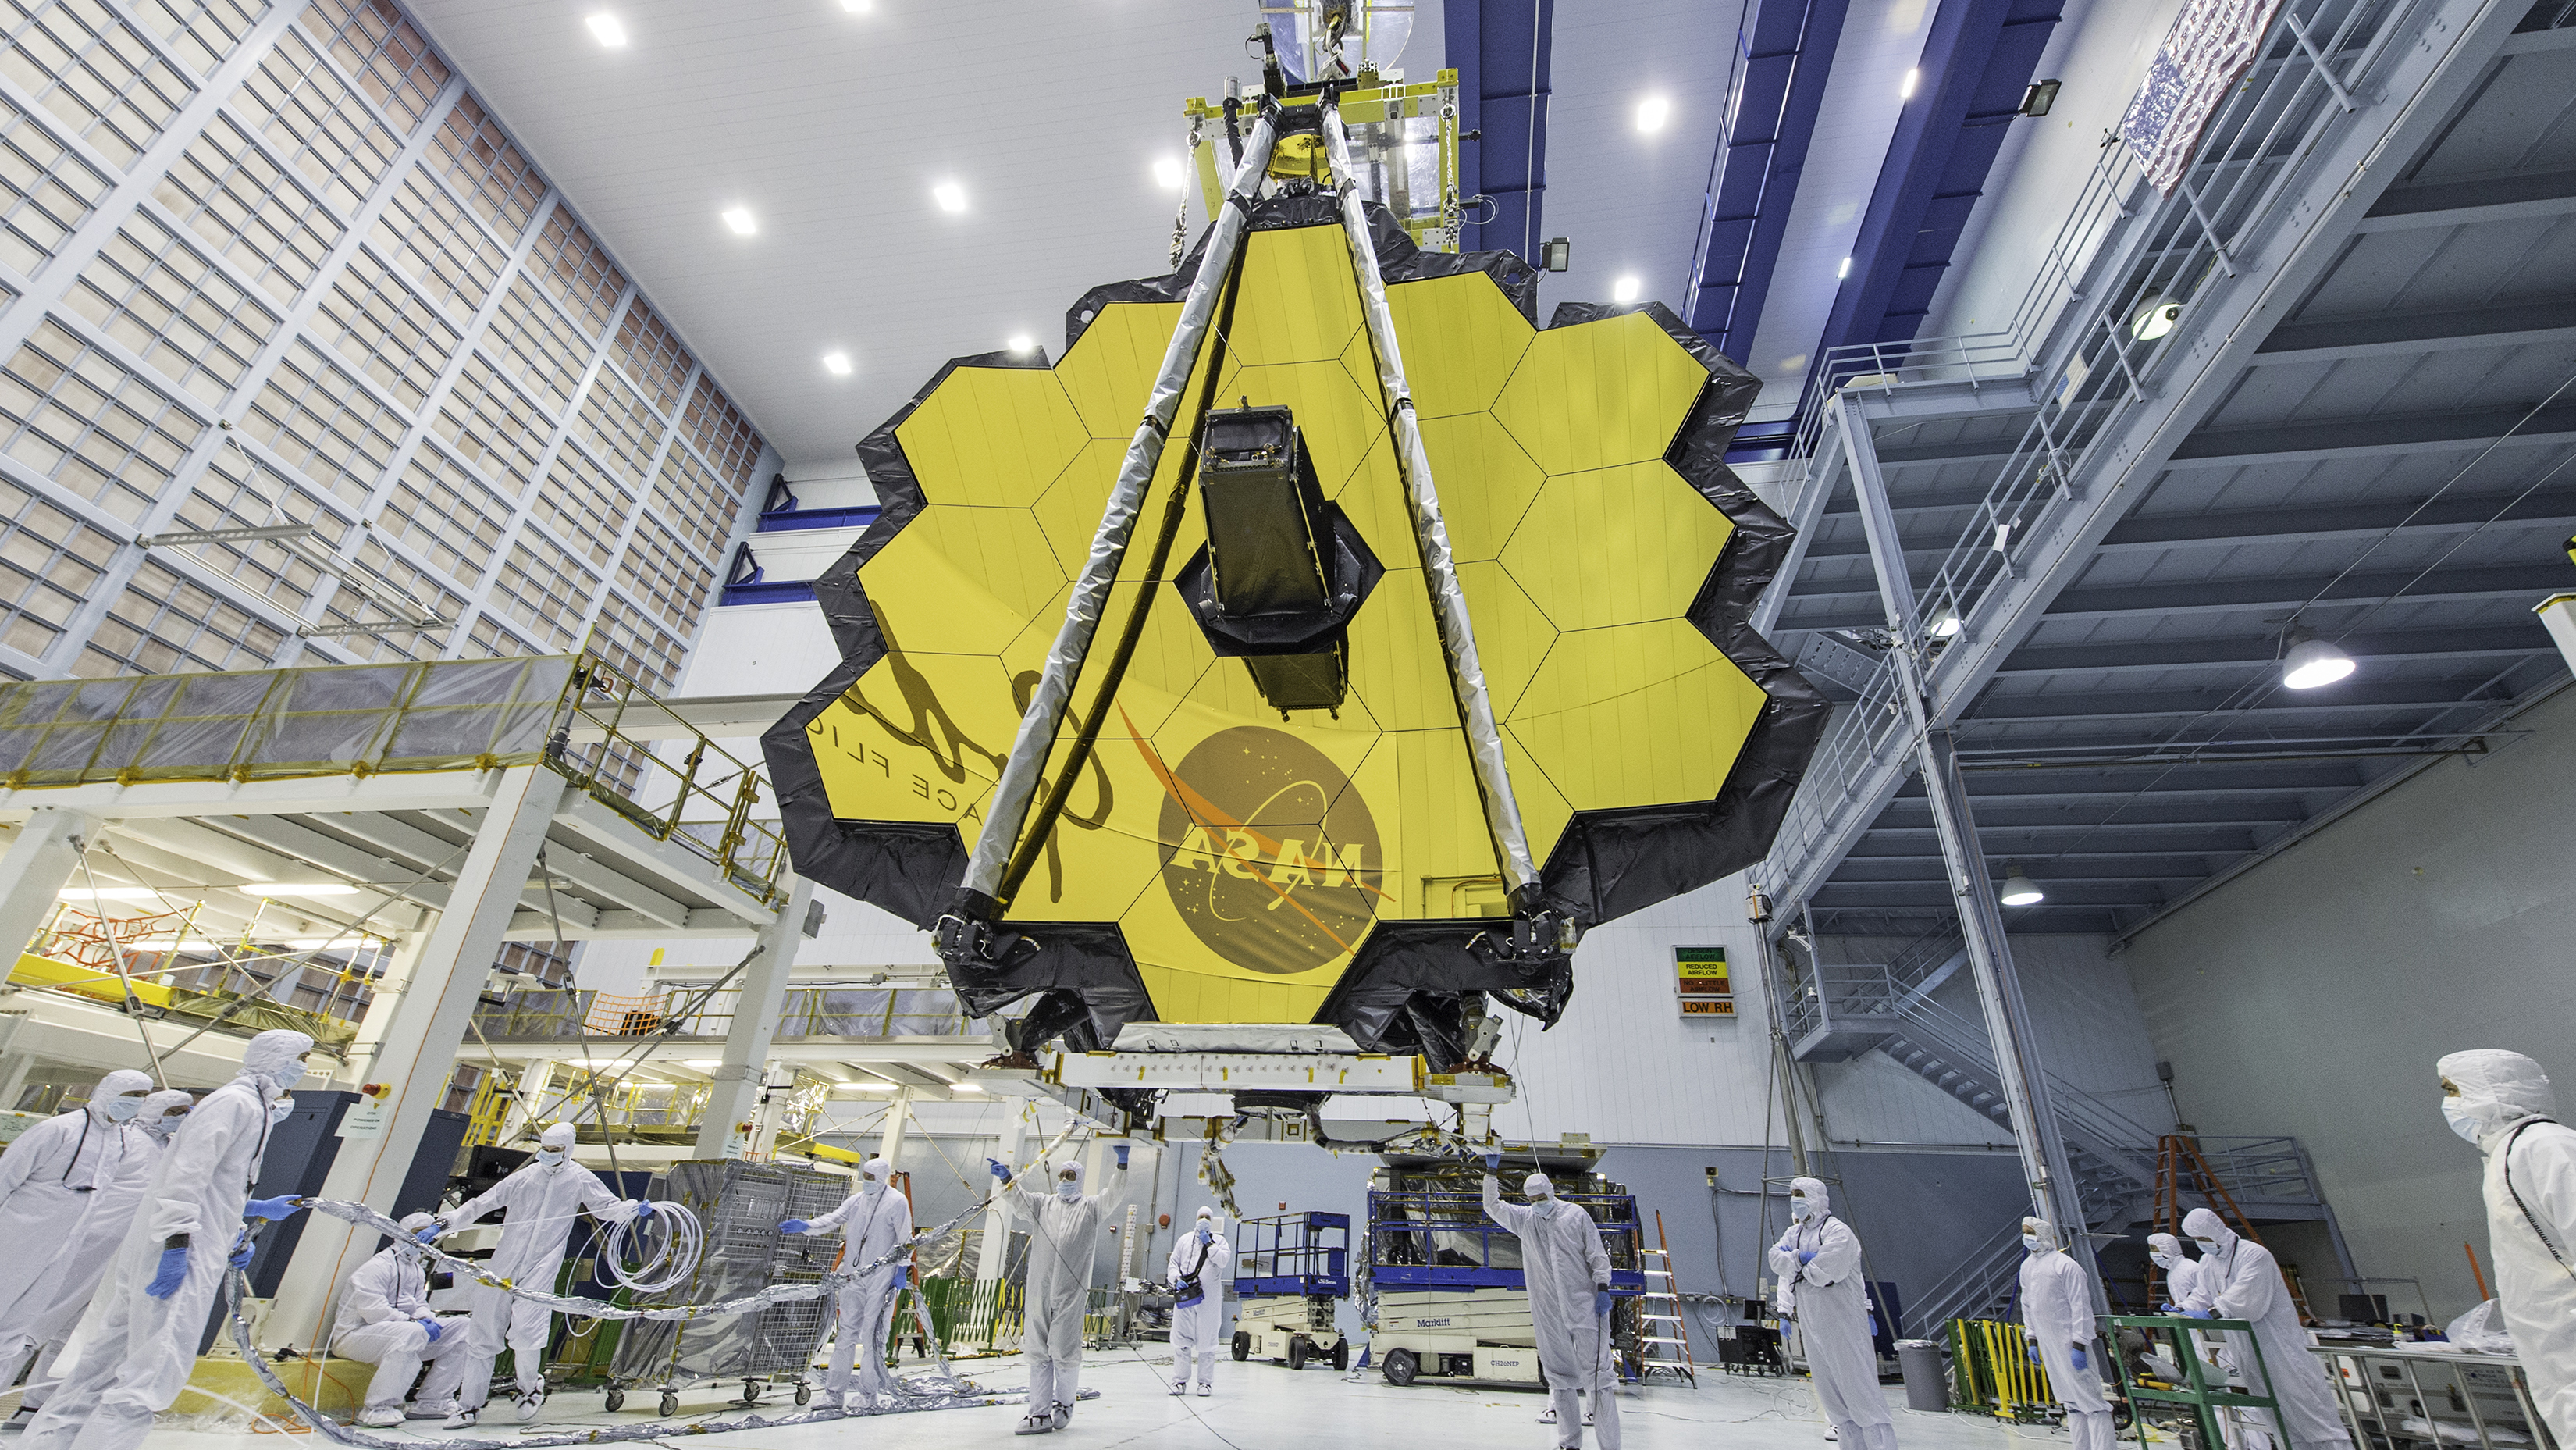 NASA technicians lift the James Webb Space Telescope using a crane at NASA’s Goddard Space Flight Center in Greenbelt, Maryland prior to launch. Photo Credit: NASA